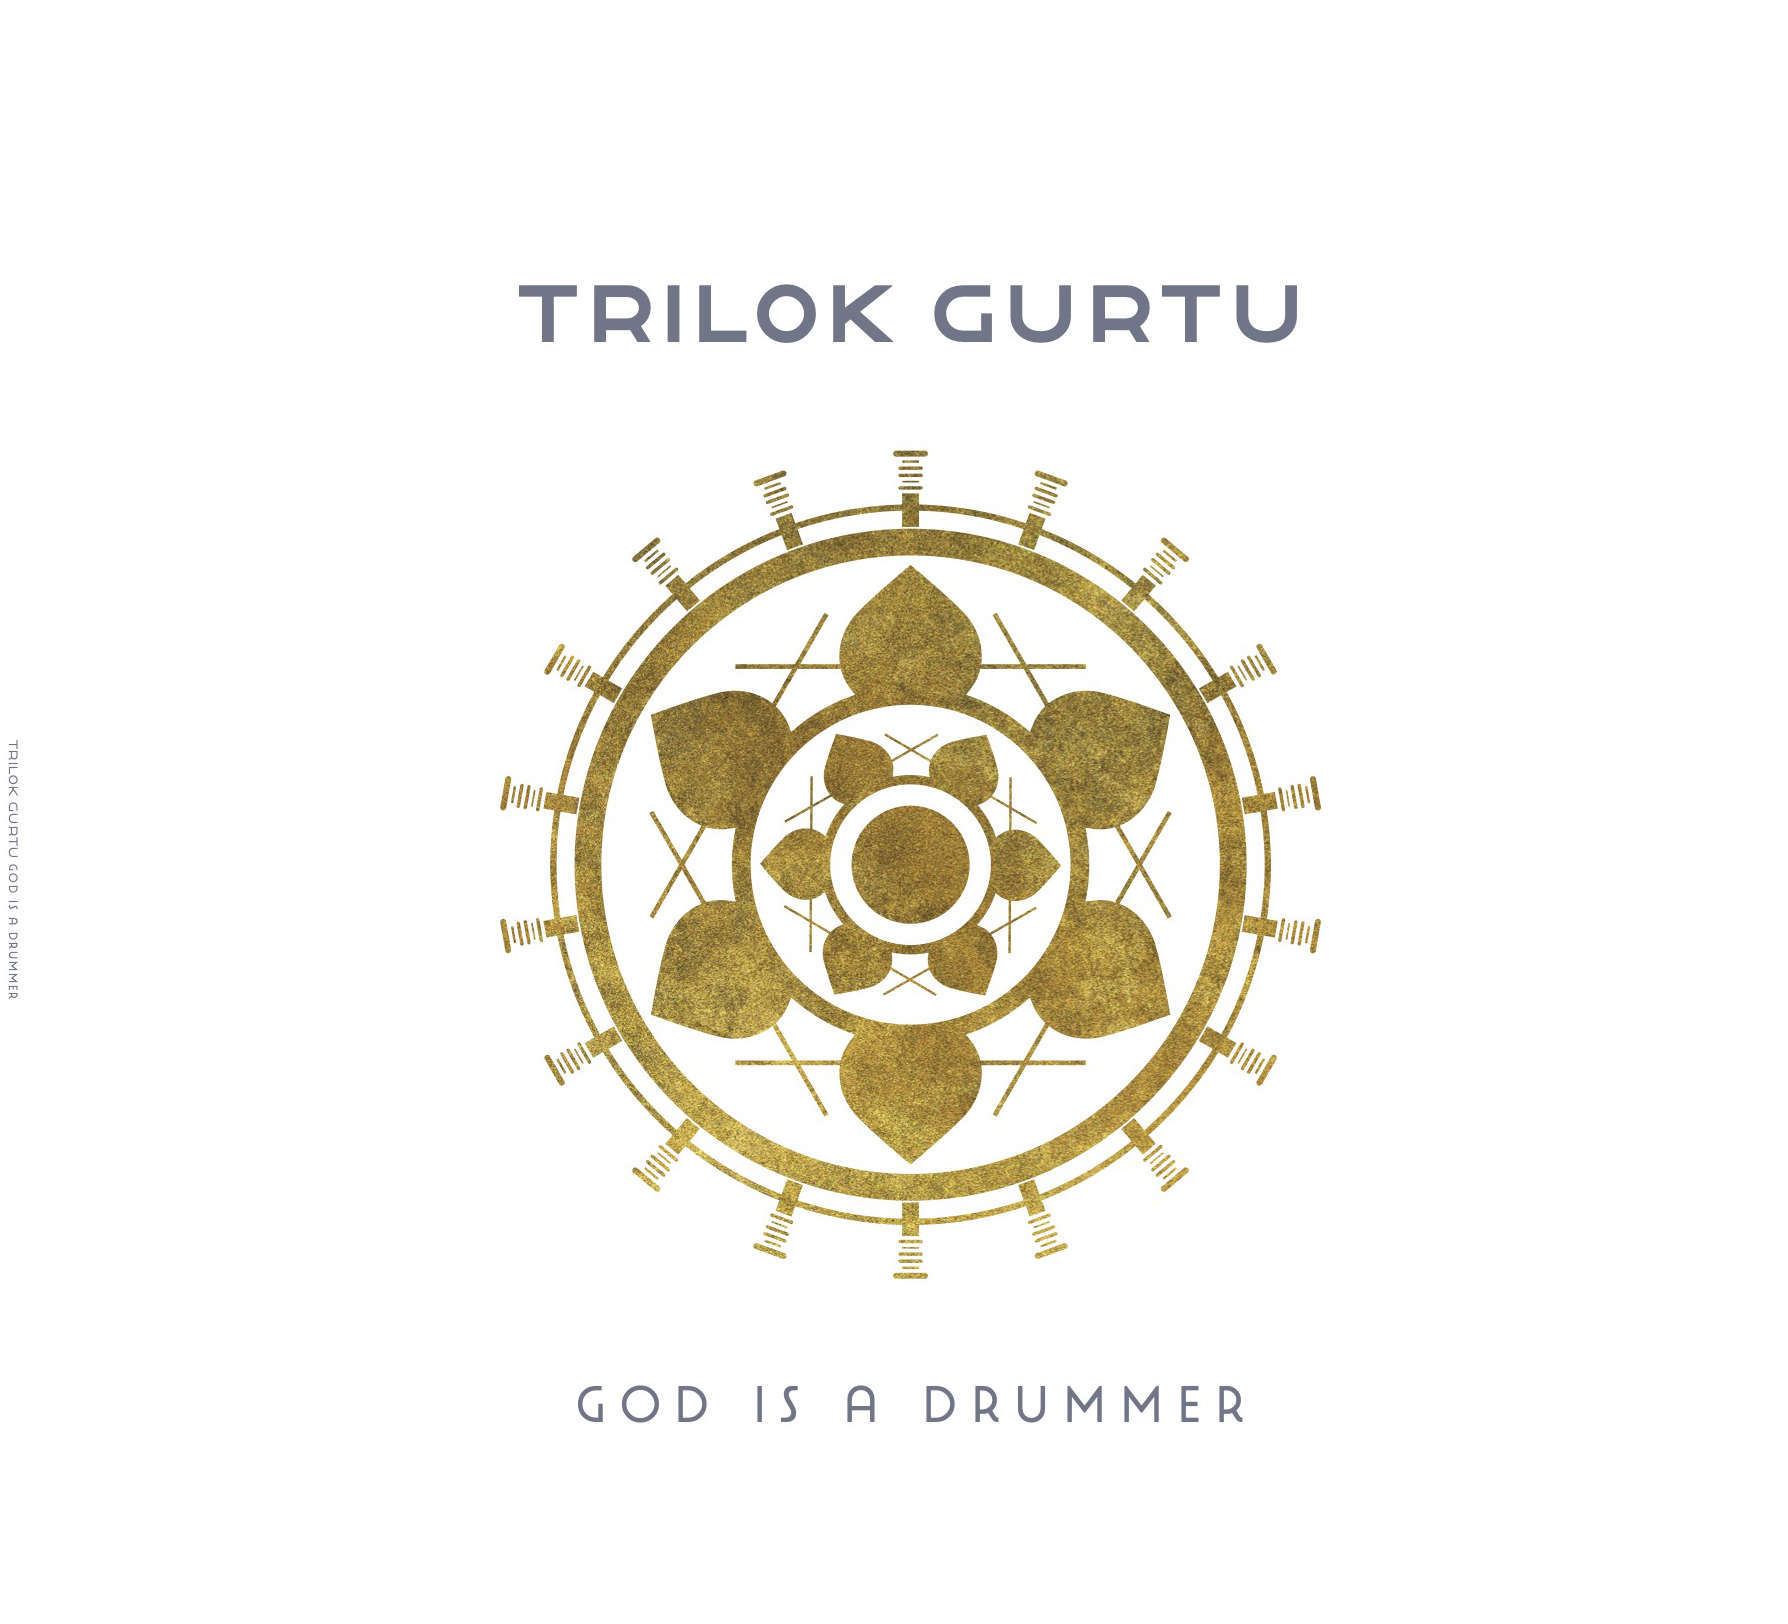 Trilok gurtu god is a drummer